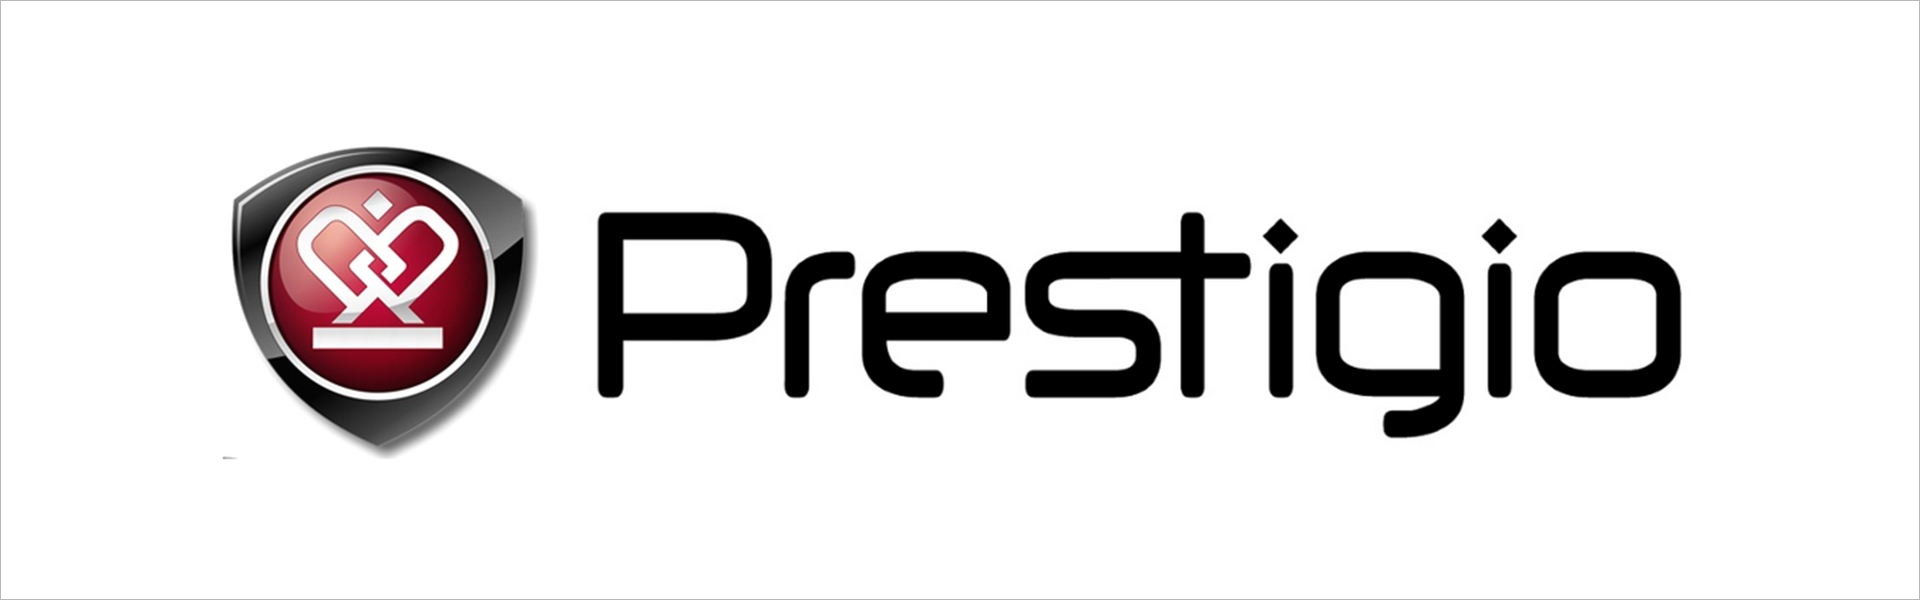 Prestigio Smartkids 1/16GB PMT3197_W_D_PK, Pink Prestigio